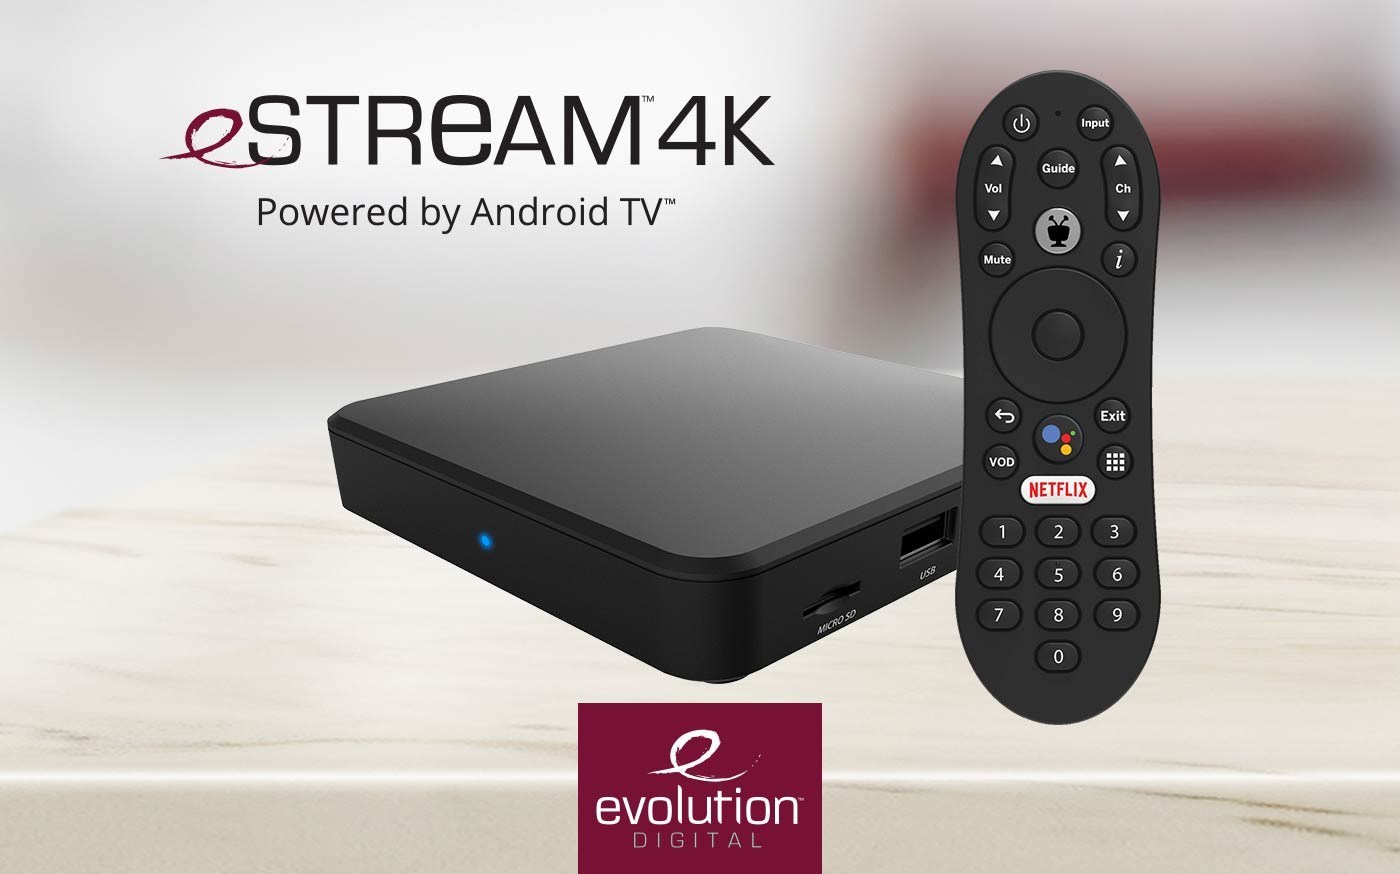 Evolution Digital eSTREAM 4K, powered by Android TV